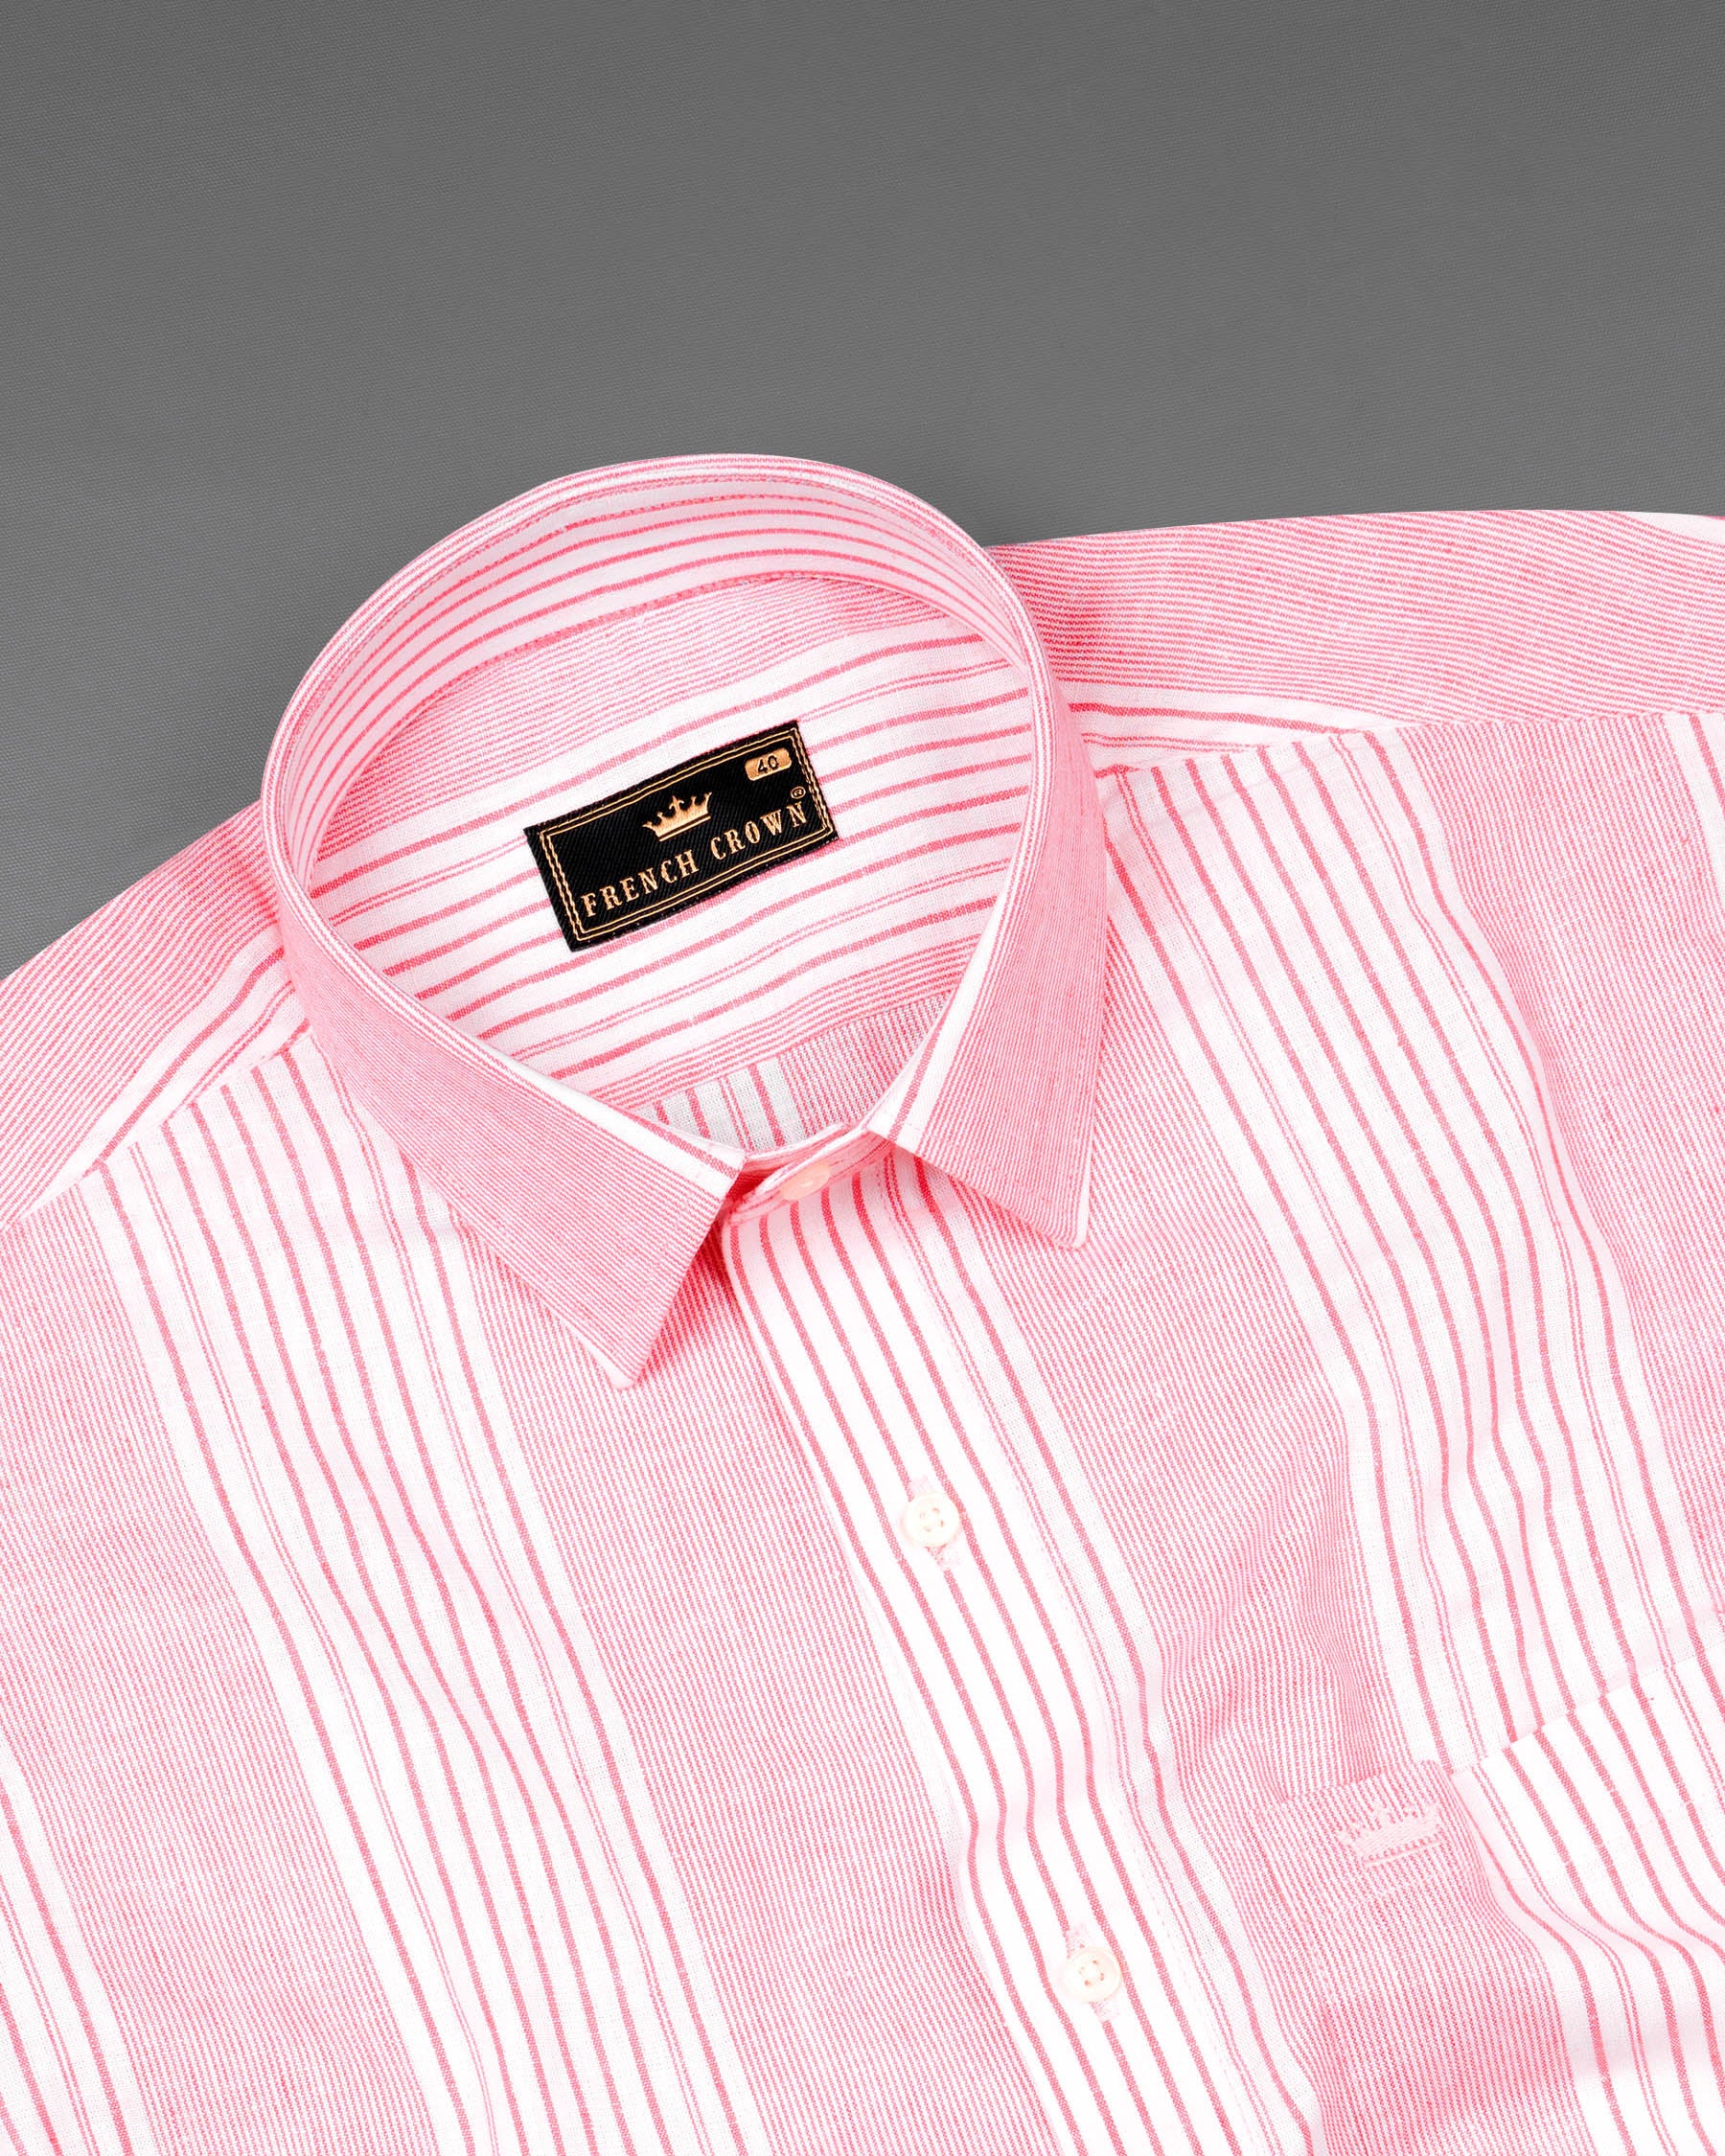 Froly Pink Striped Luxurious Linen Shirt